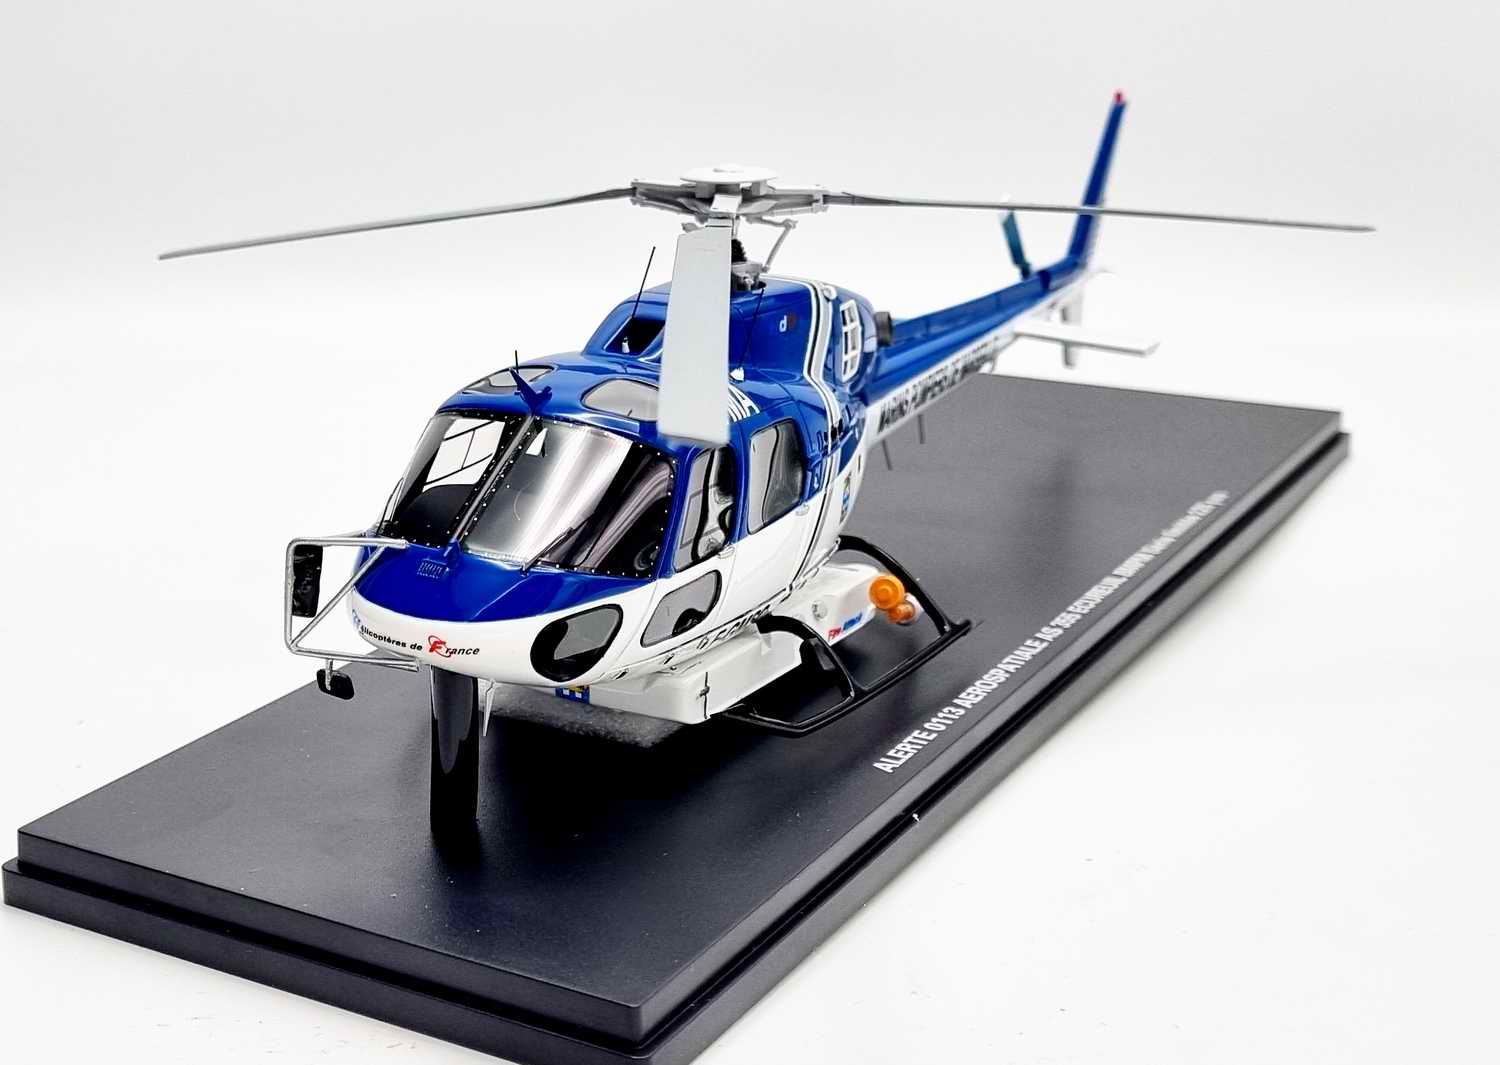 Hélicoptère Eurocopter EC135 Gendarmerie New Ray : King Jouet, Les